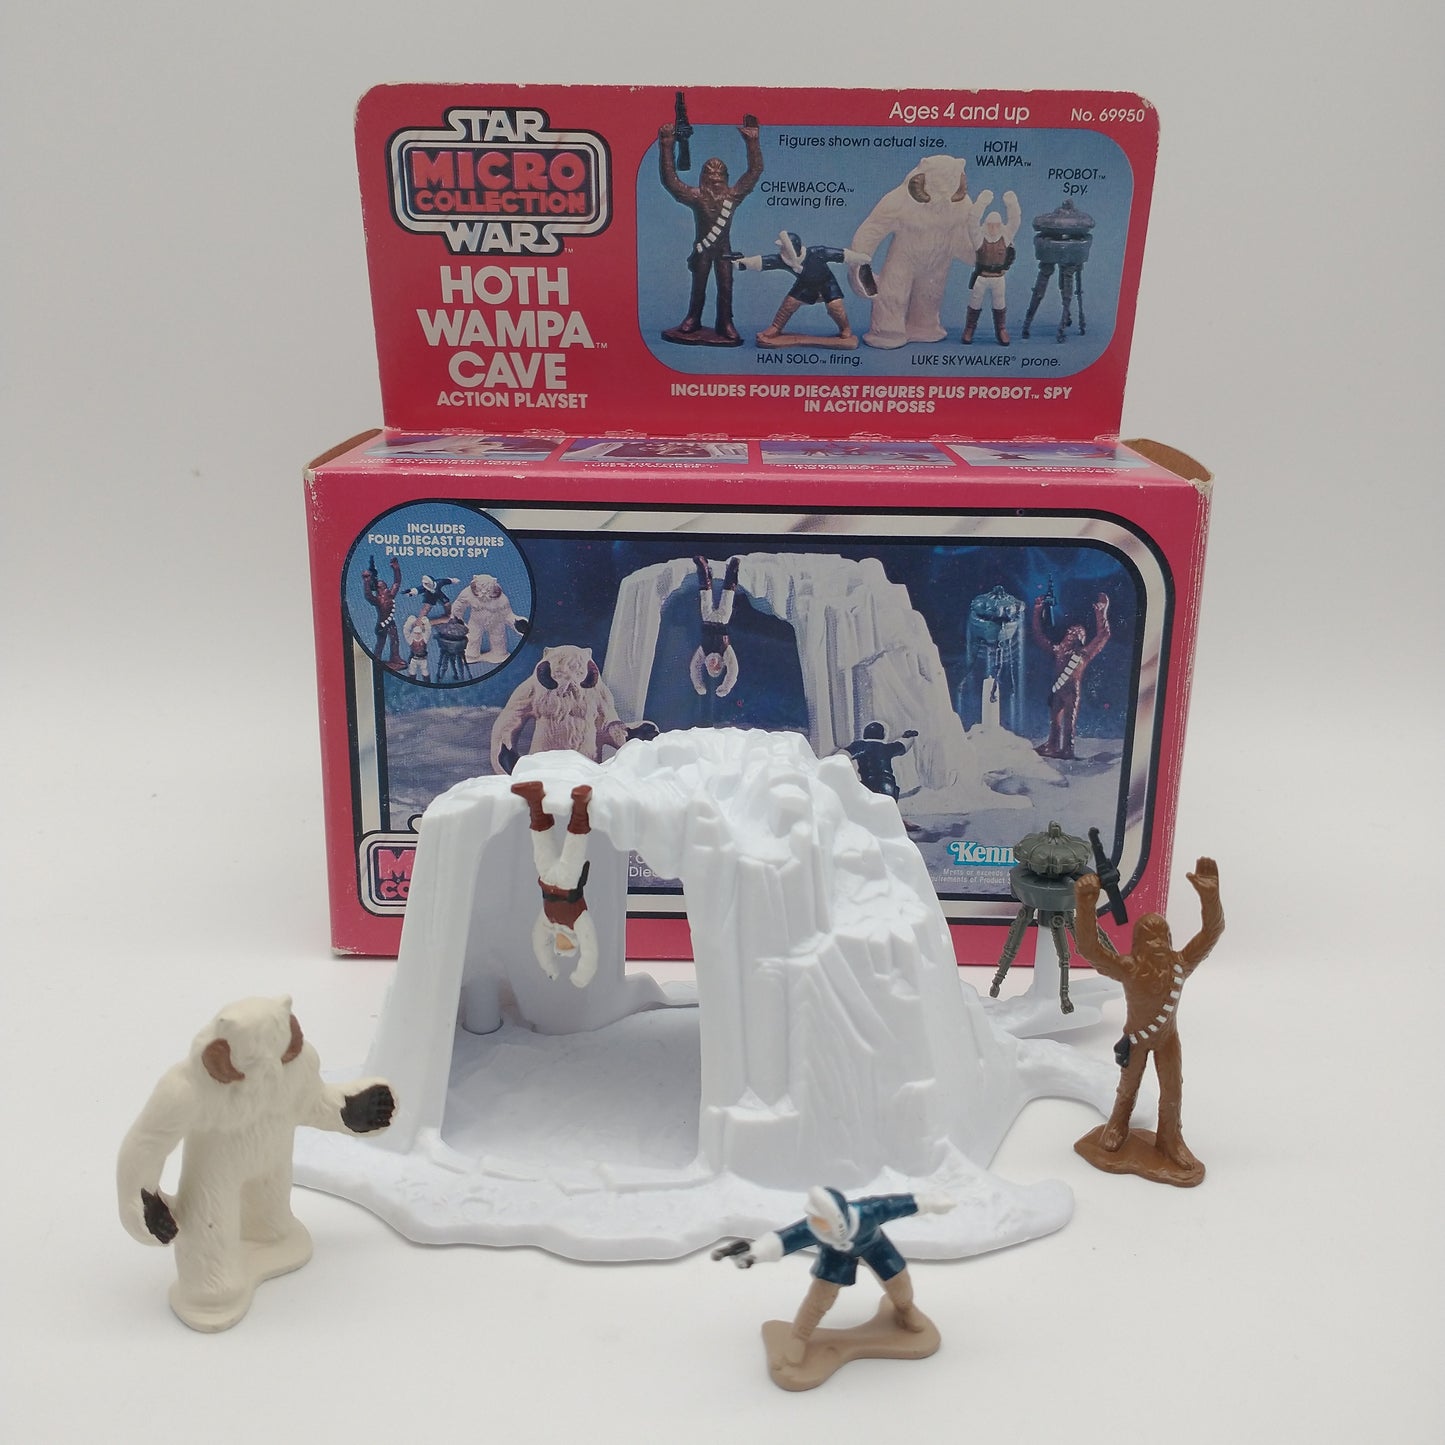 Star Wars Micro Collection Hoth Wampa Cave Action Playset 1982 Hasbro